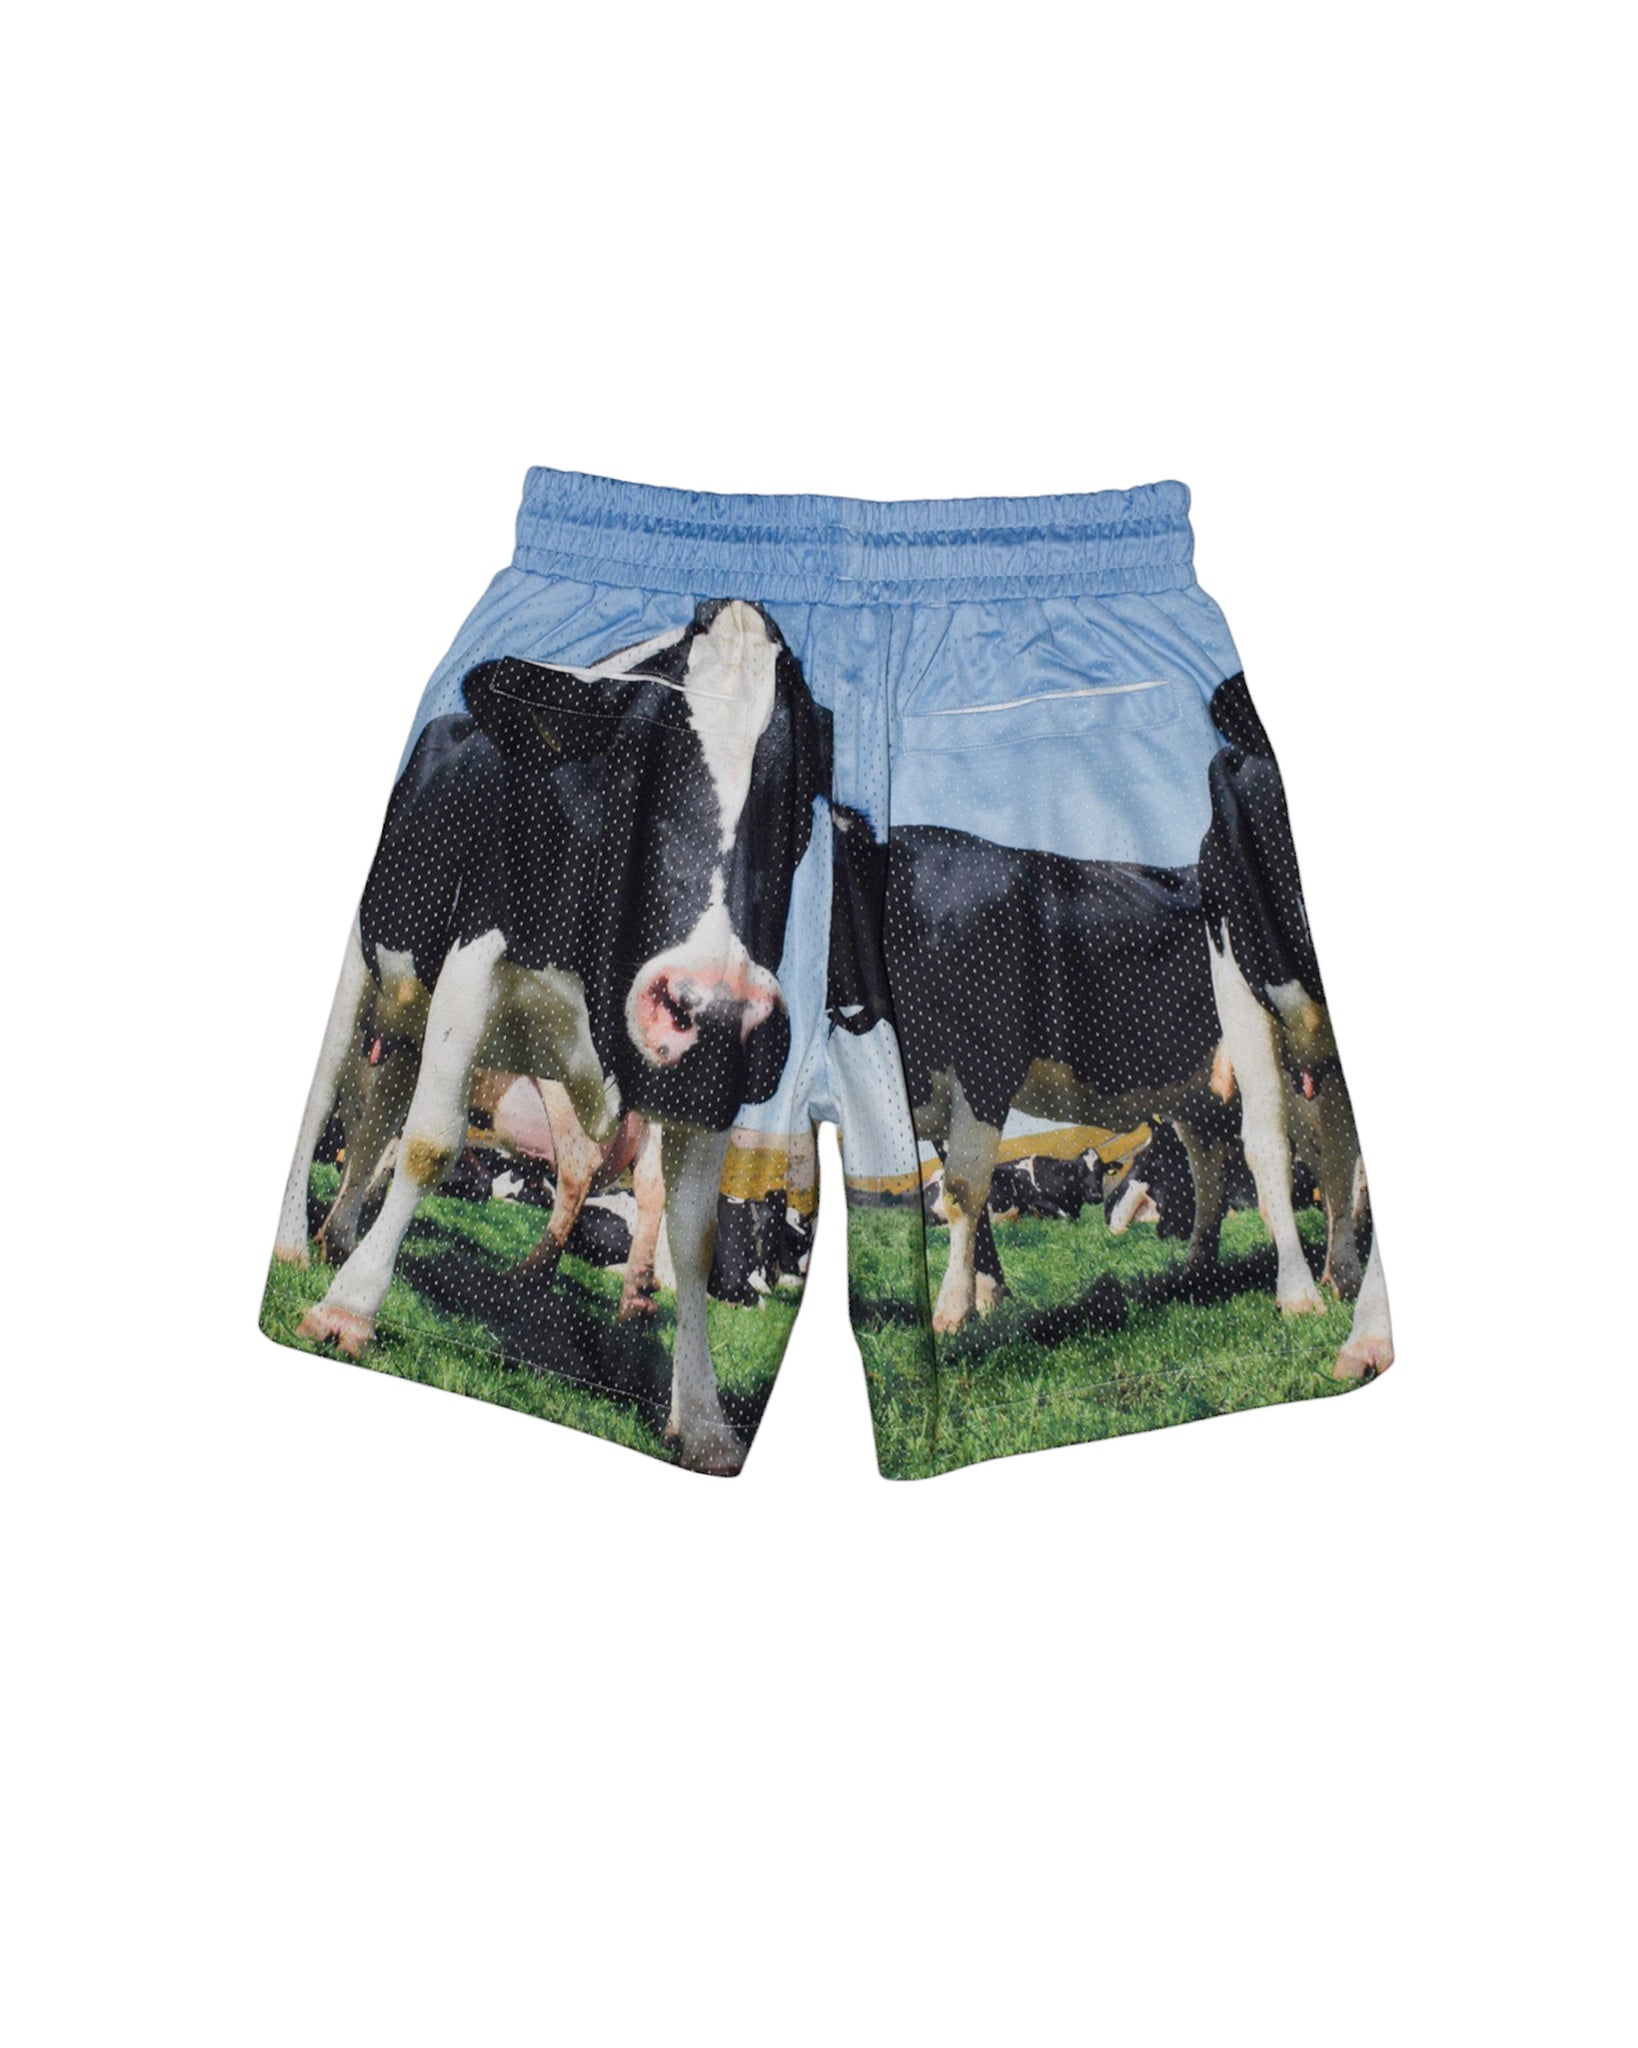 Cow Short